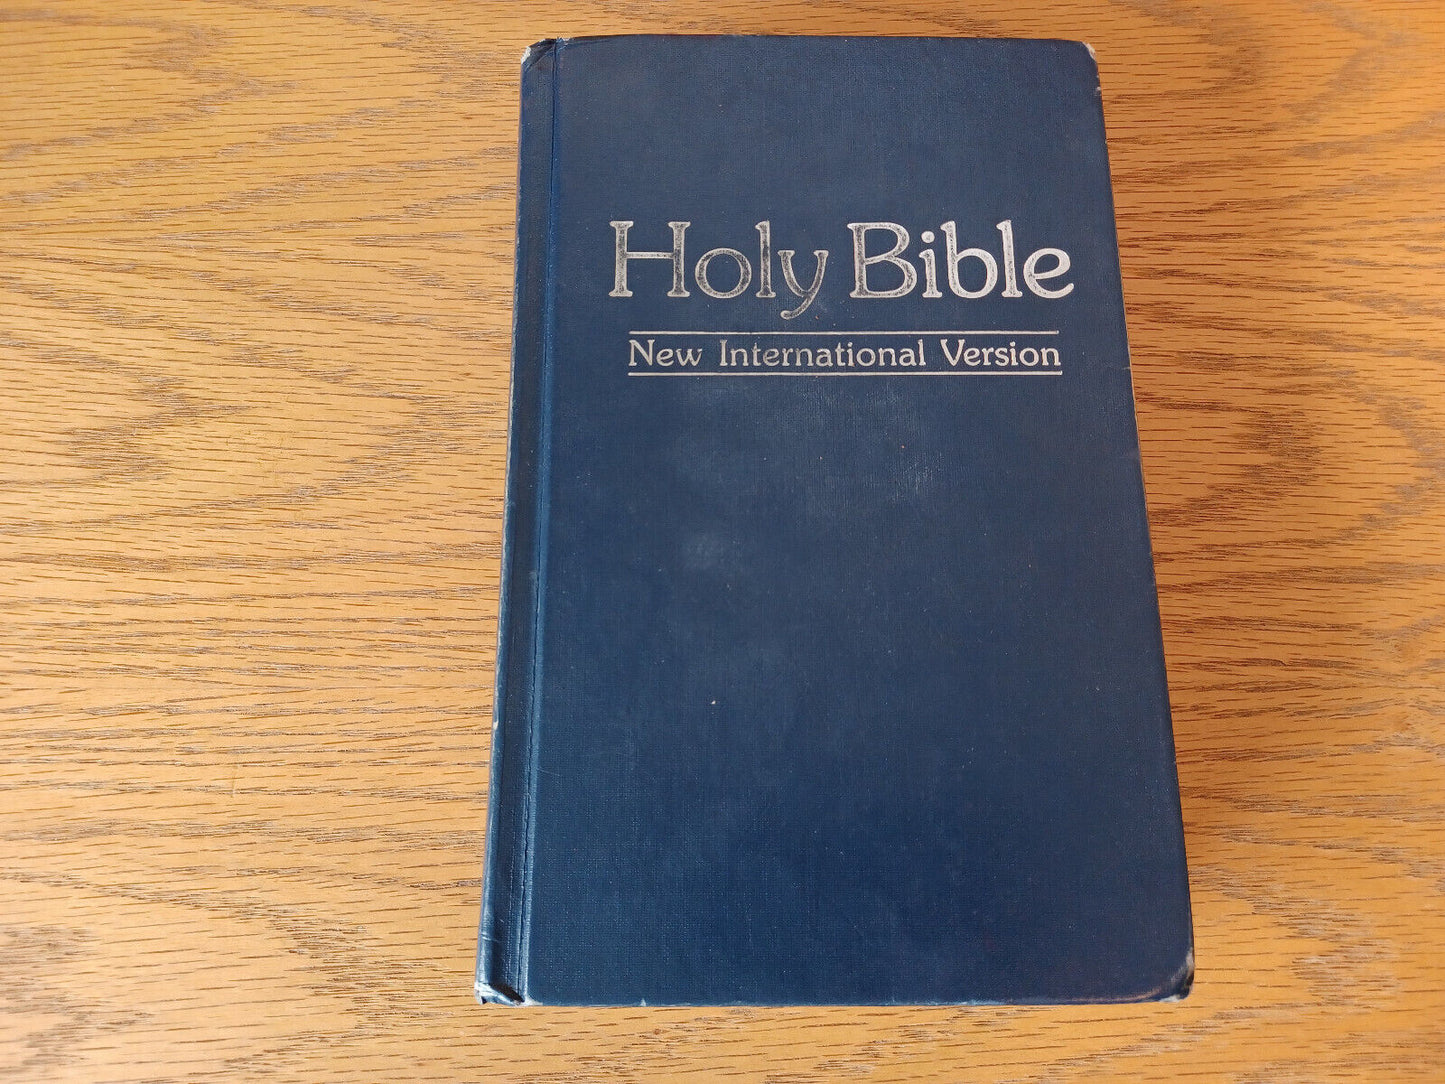 Holy Bible New International Version Hardcover International Bible Society 1984A